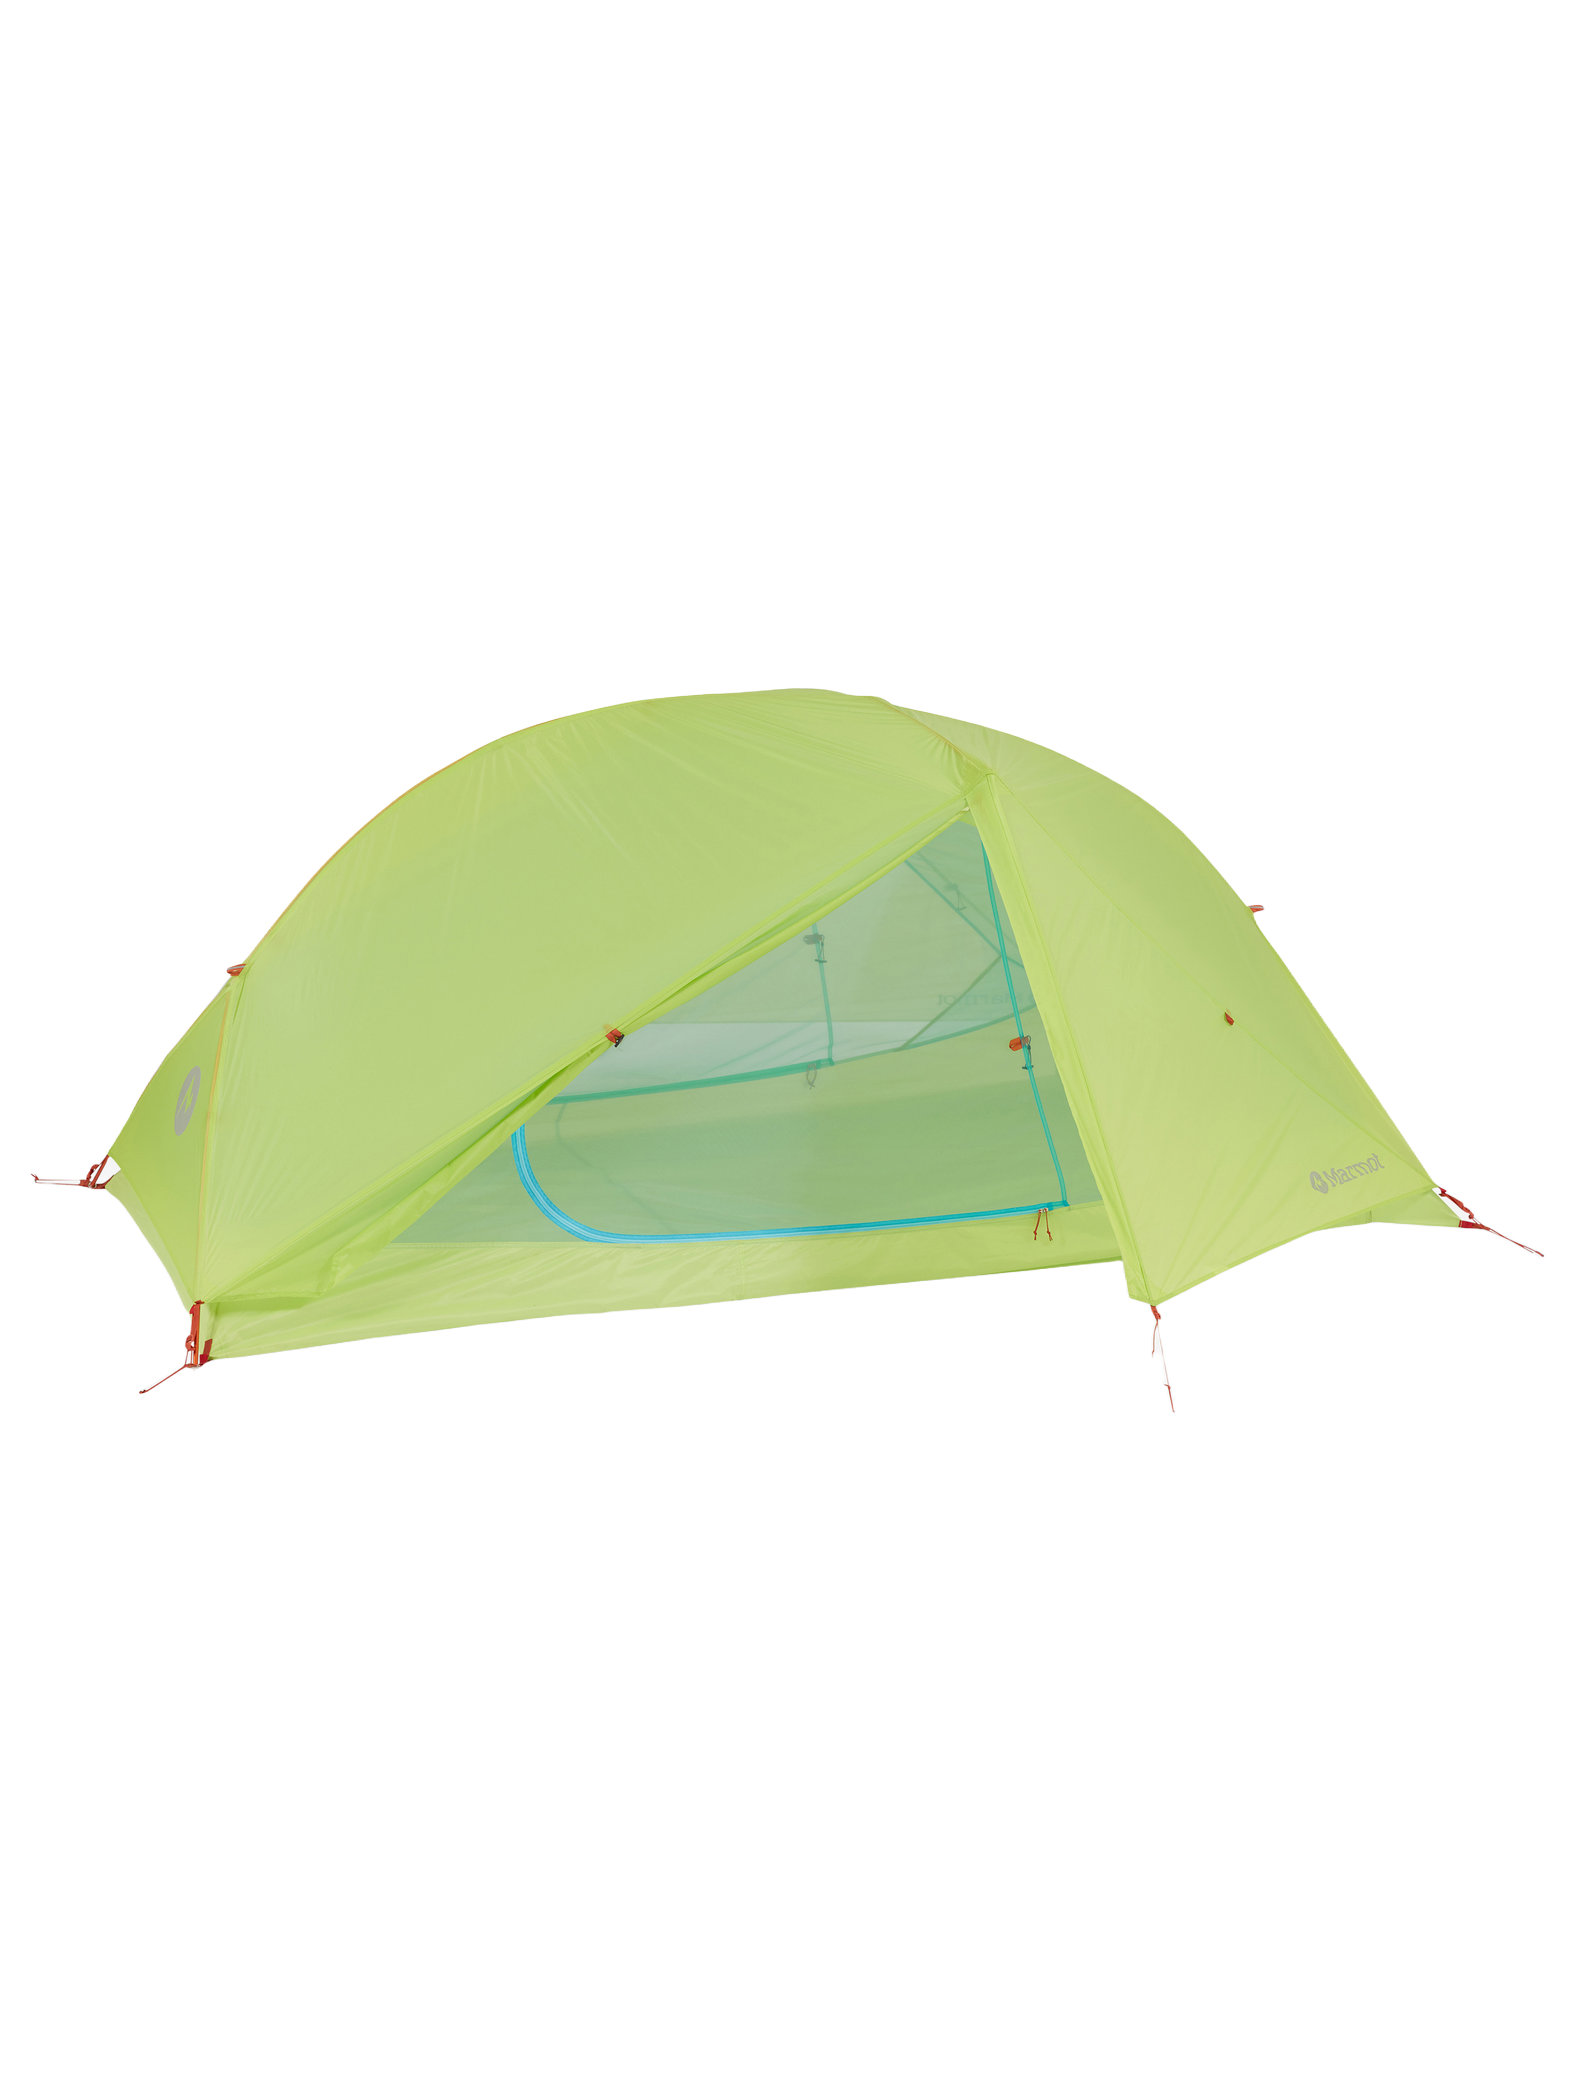 Marmot Superalloy Tent - 2 Person